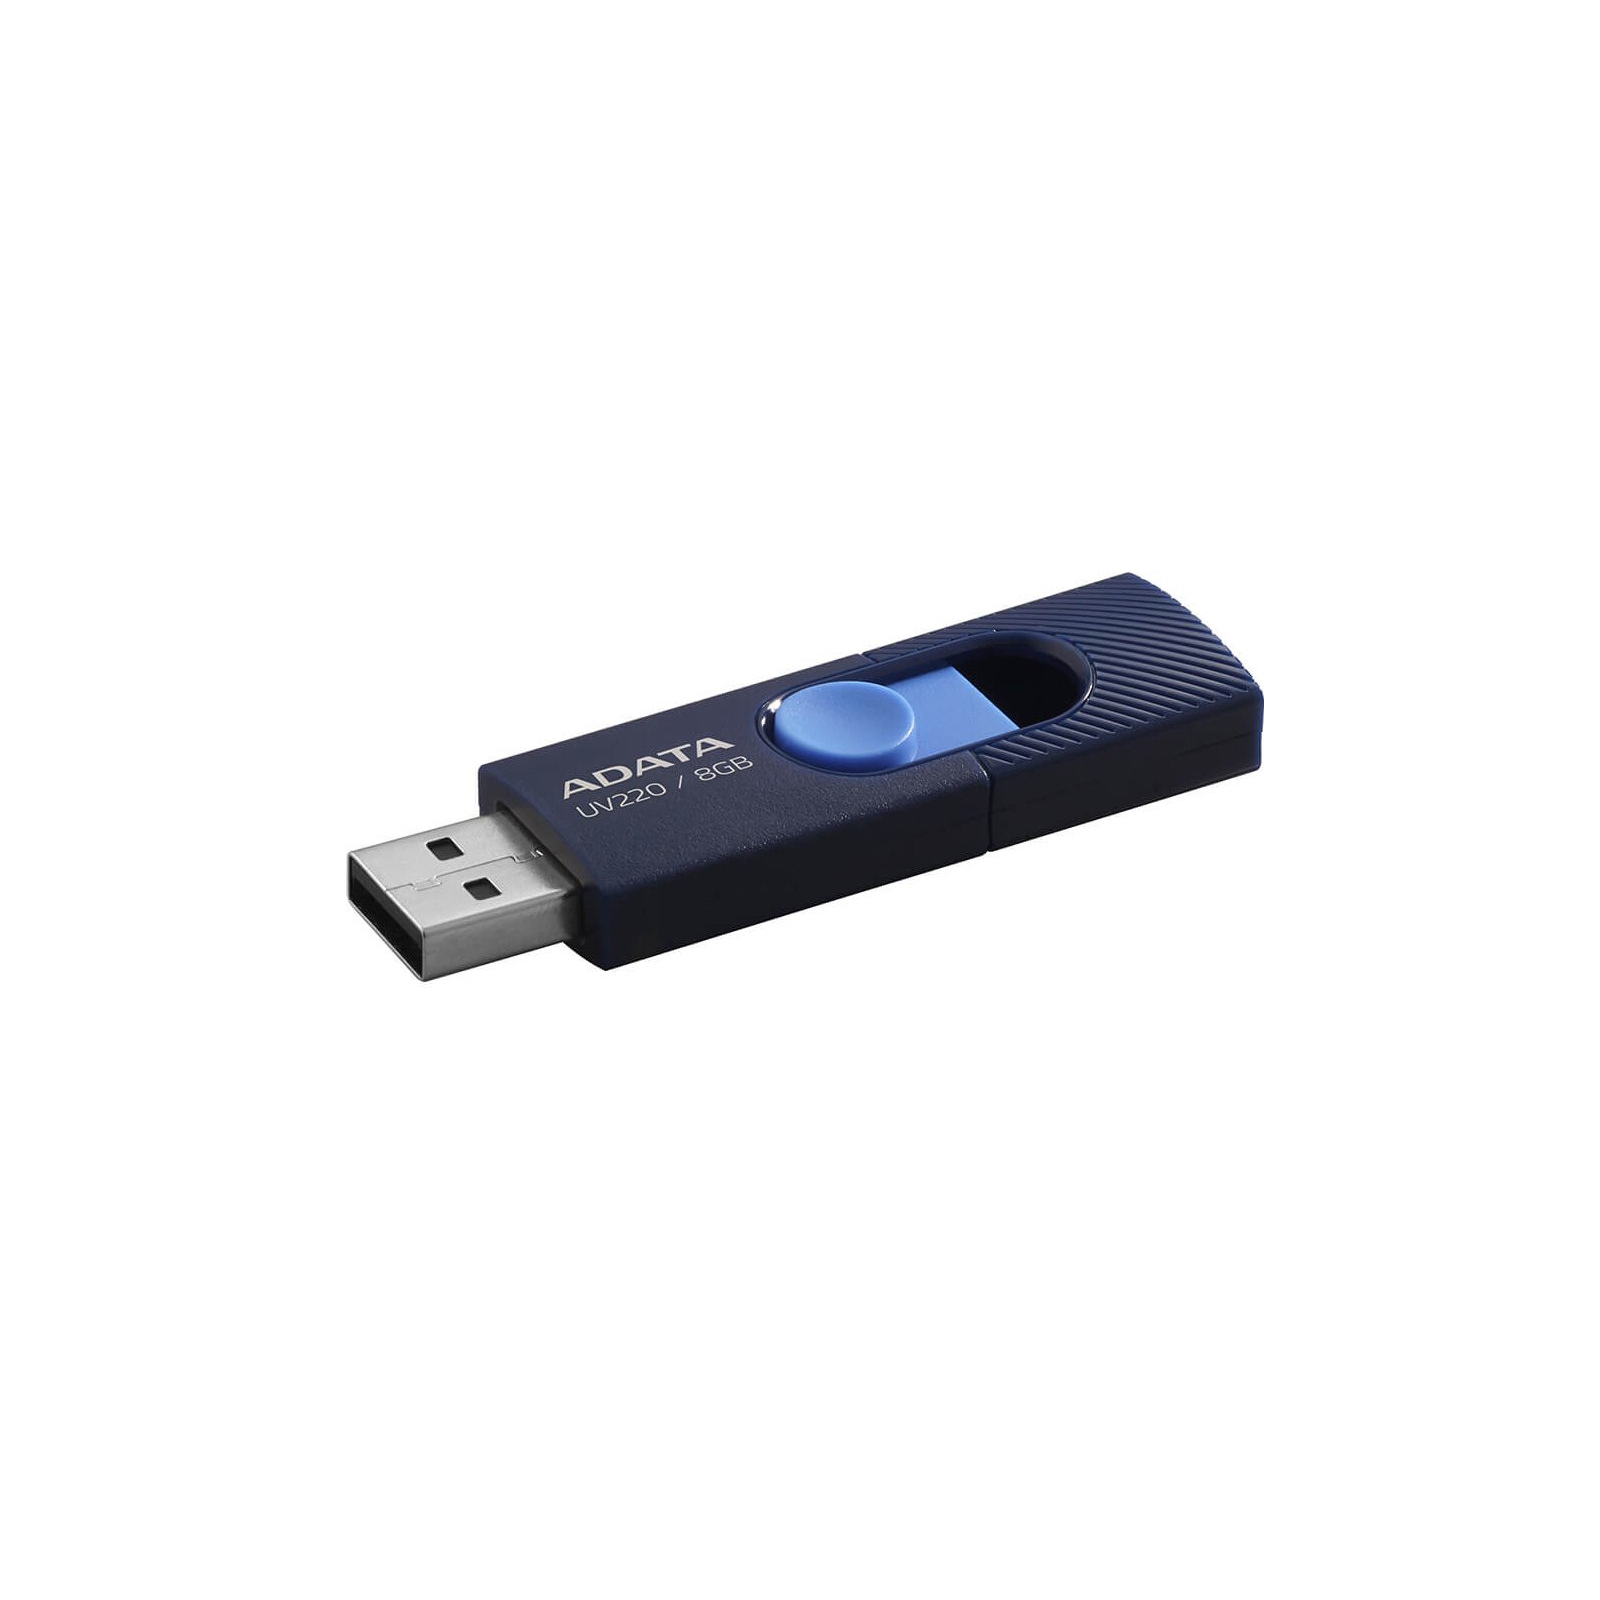 USB флеш накопитель ADATA 8GB UV220 Blue/Navy USB 2.0 (AUV220-8G-RBLNV) изображение 2